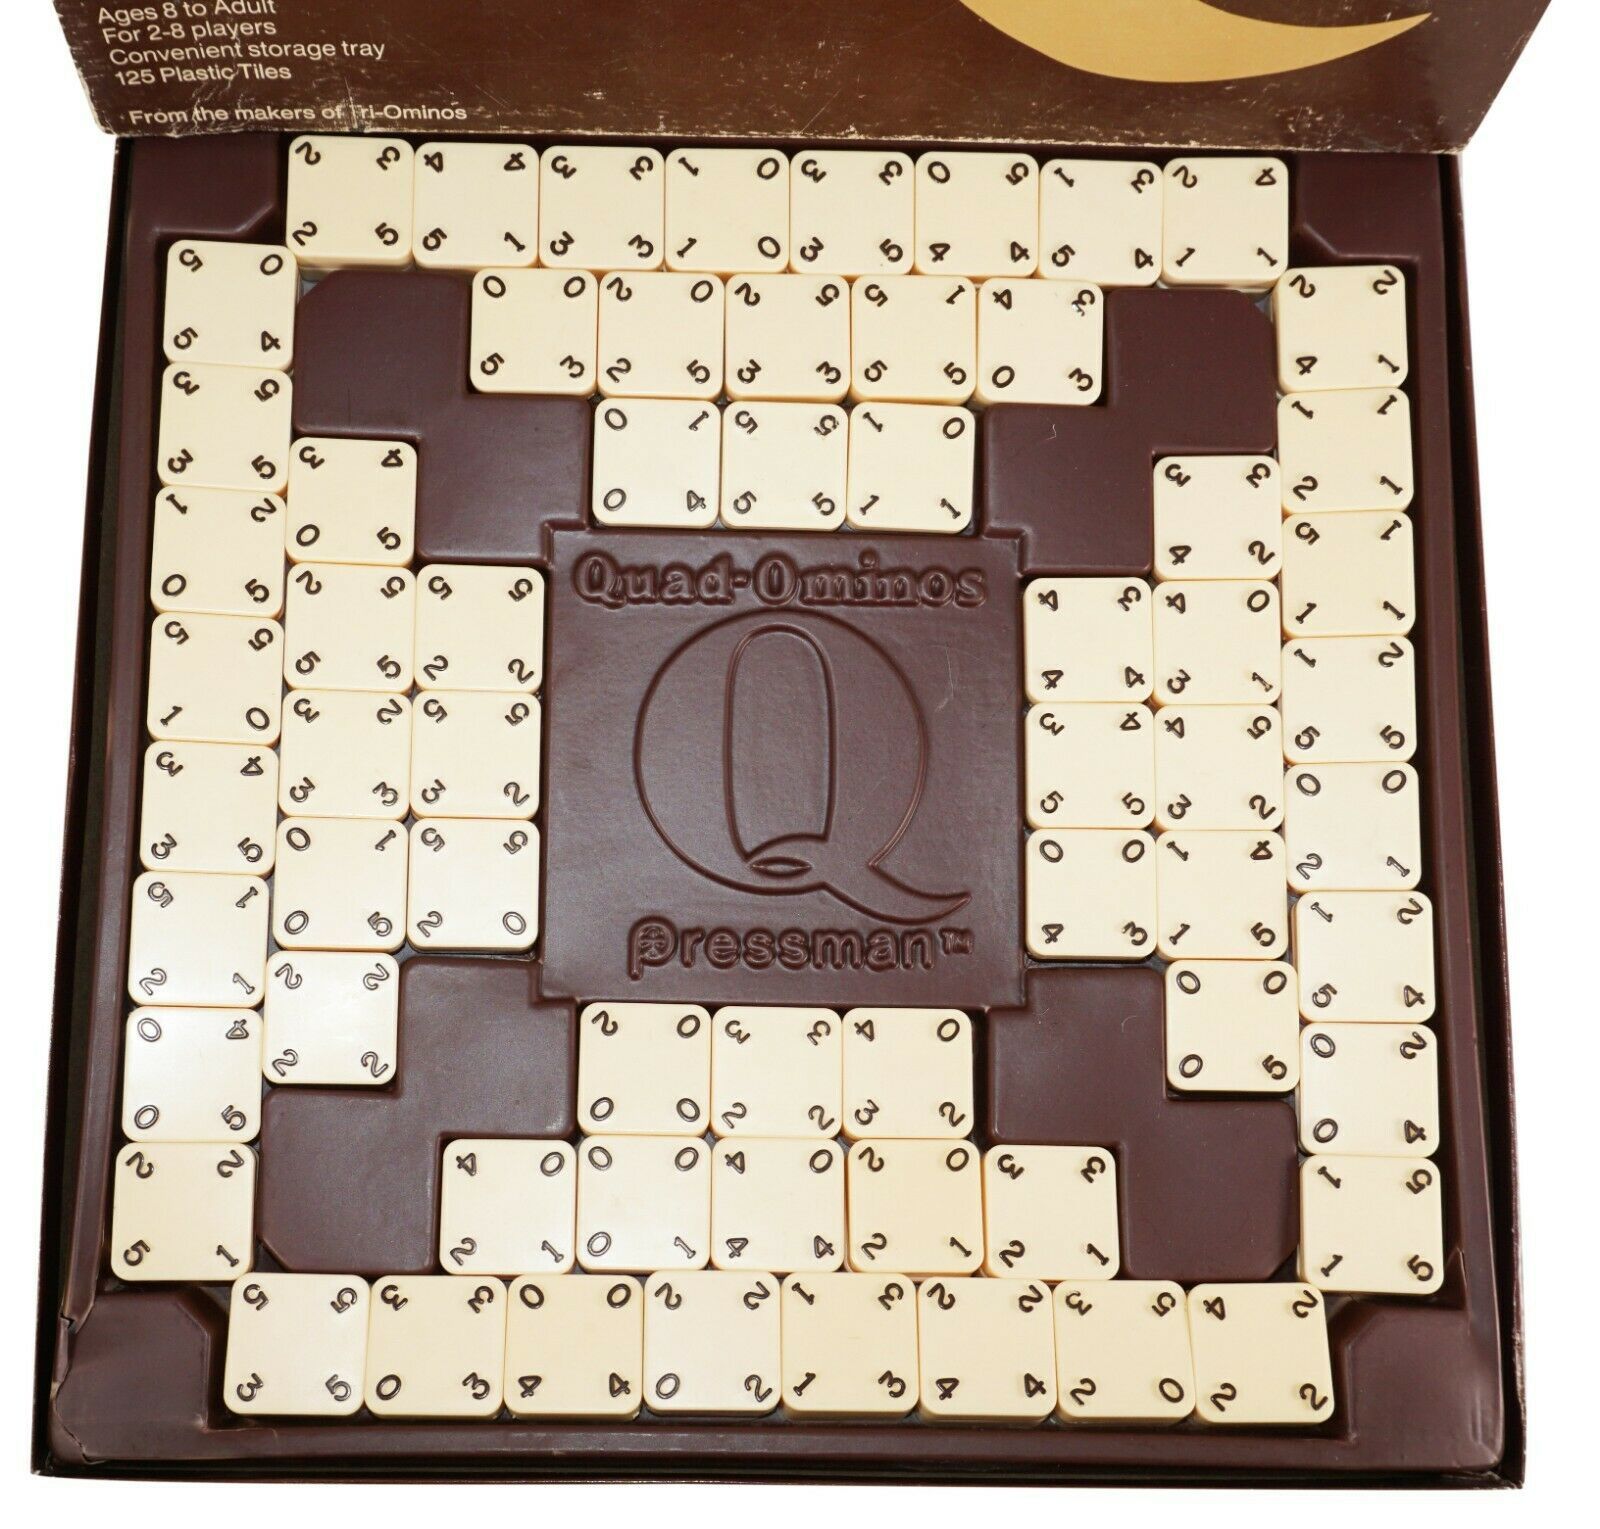 QUAD-OMINOS Domino Tile Board Game Pressman and 50 similar items